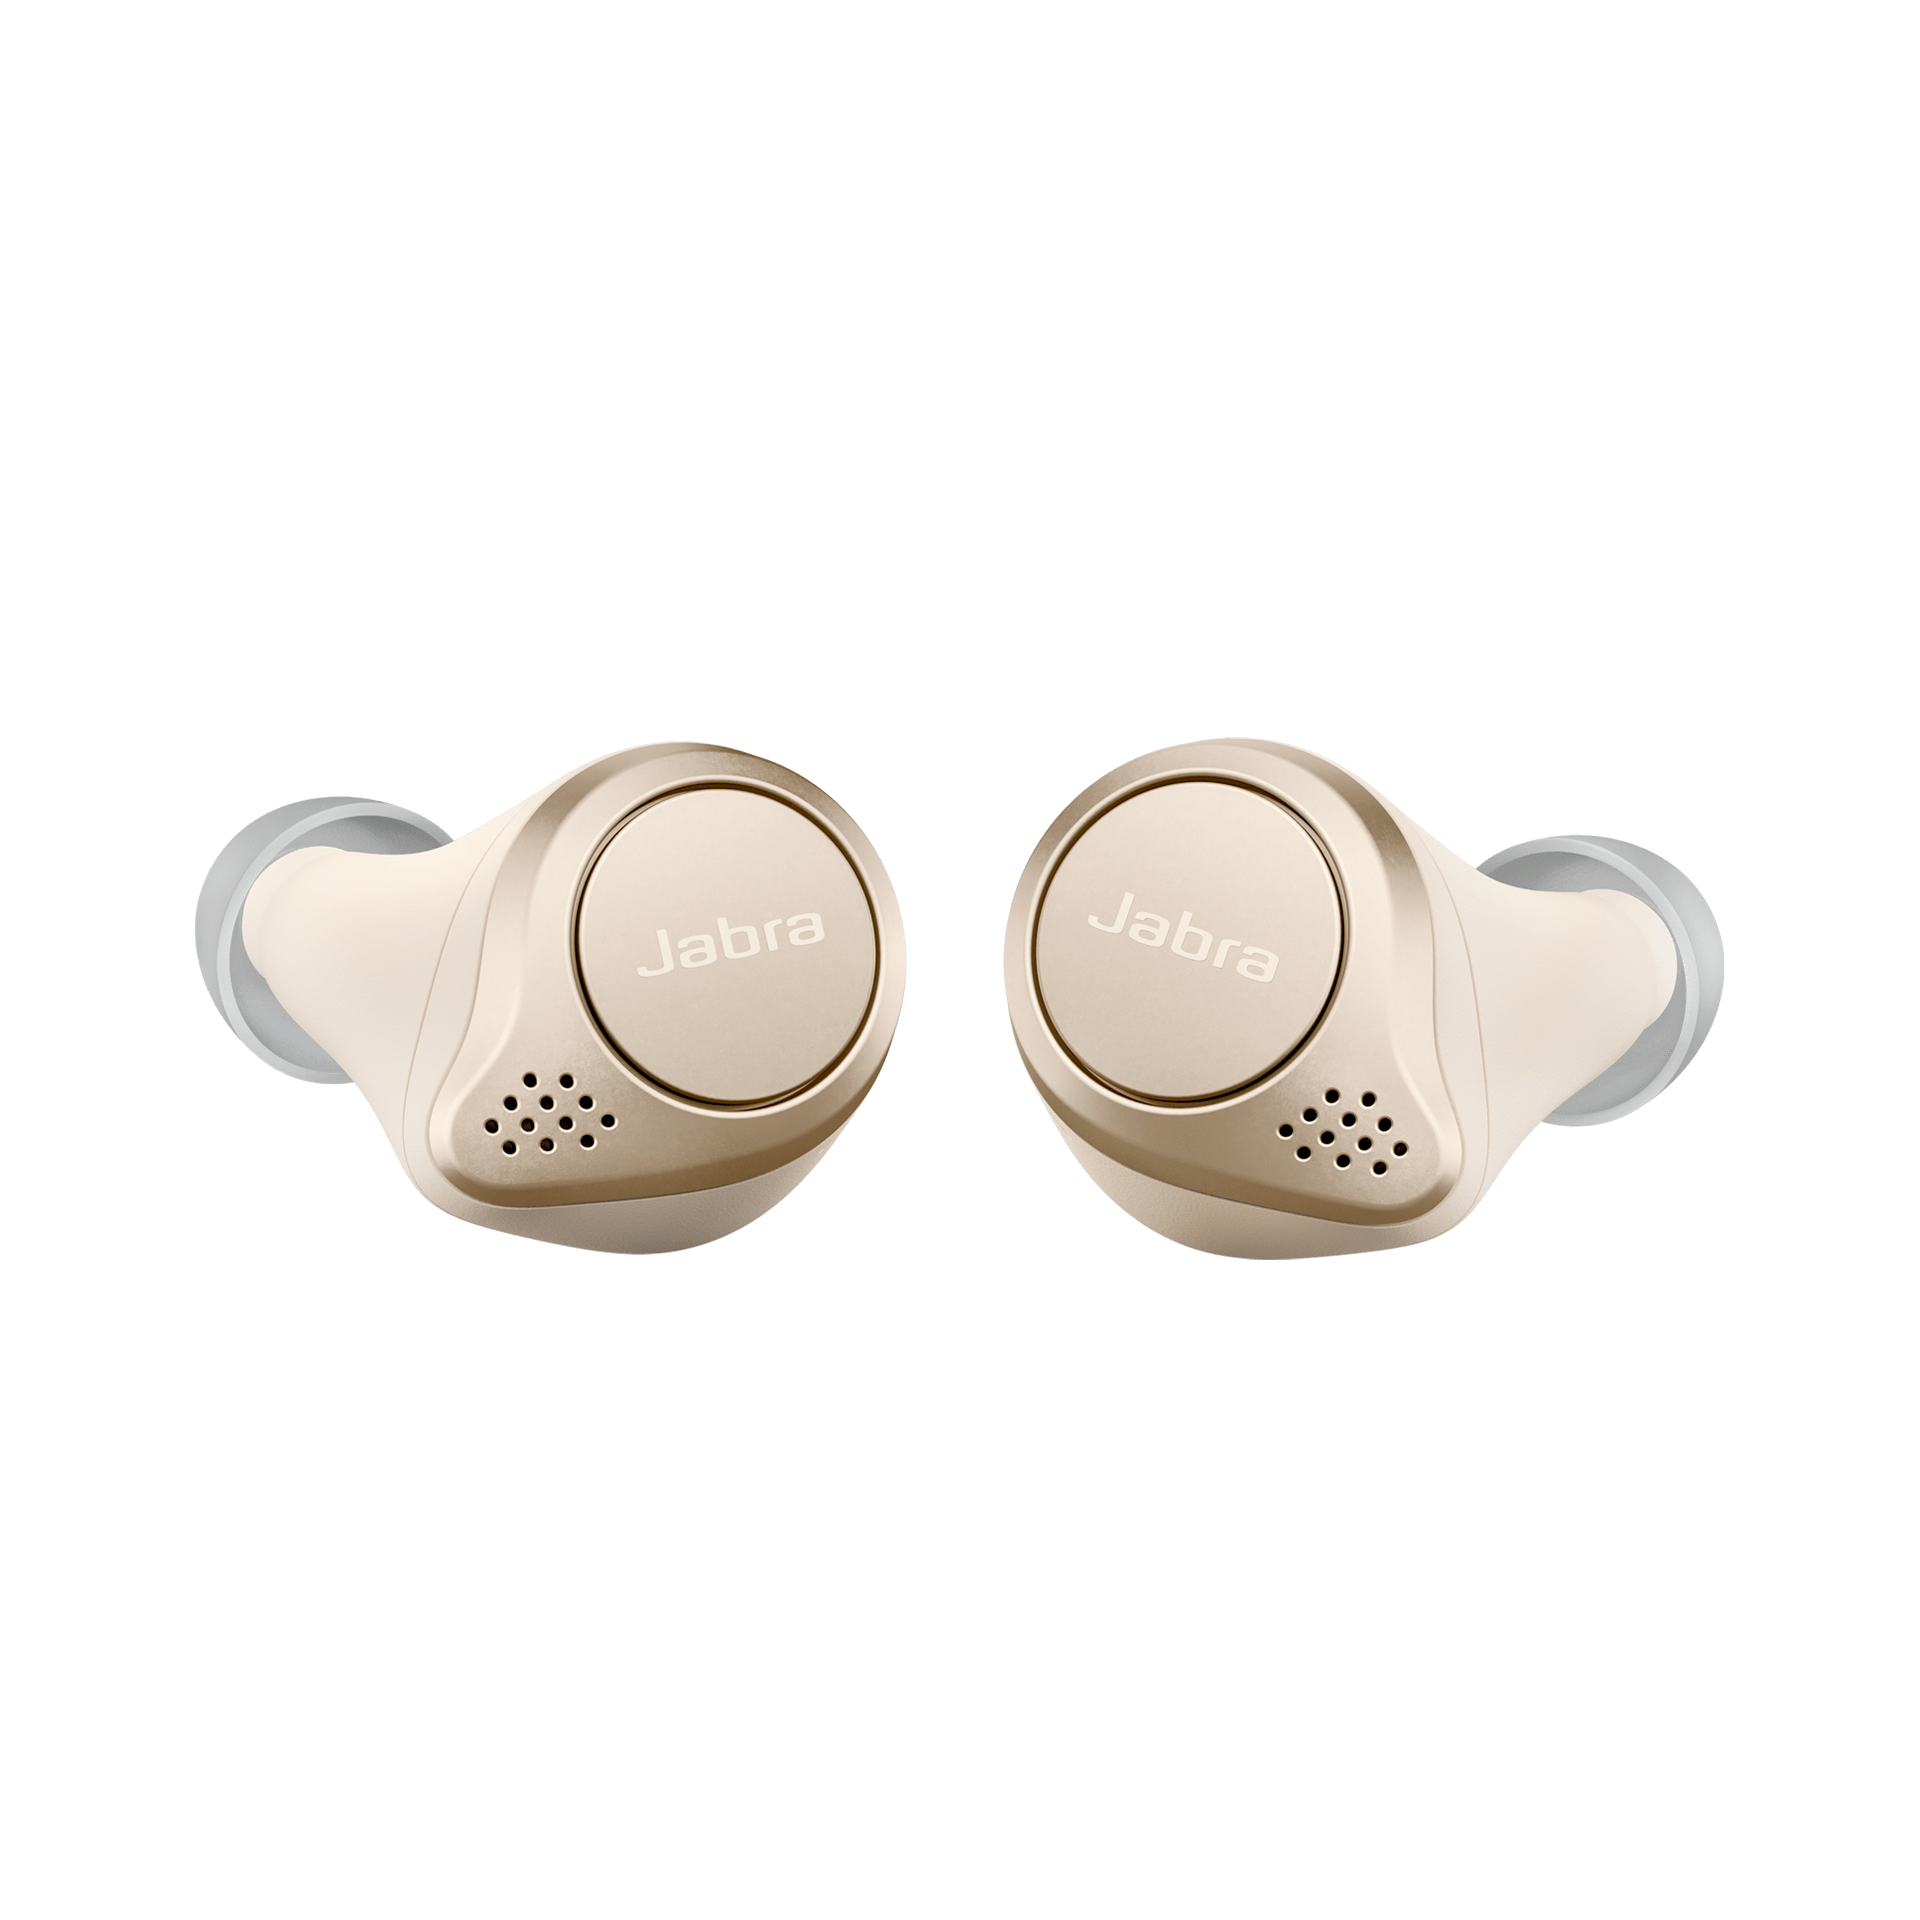 Jabra Elite 75t Replacement Earbuds - Gold Beige